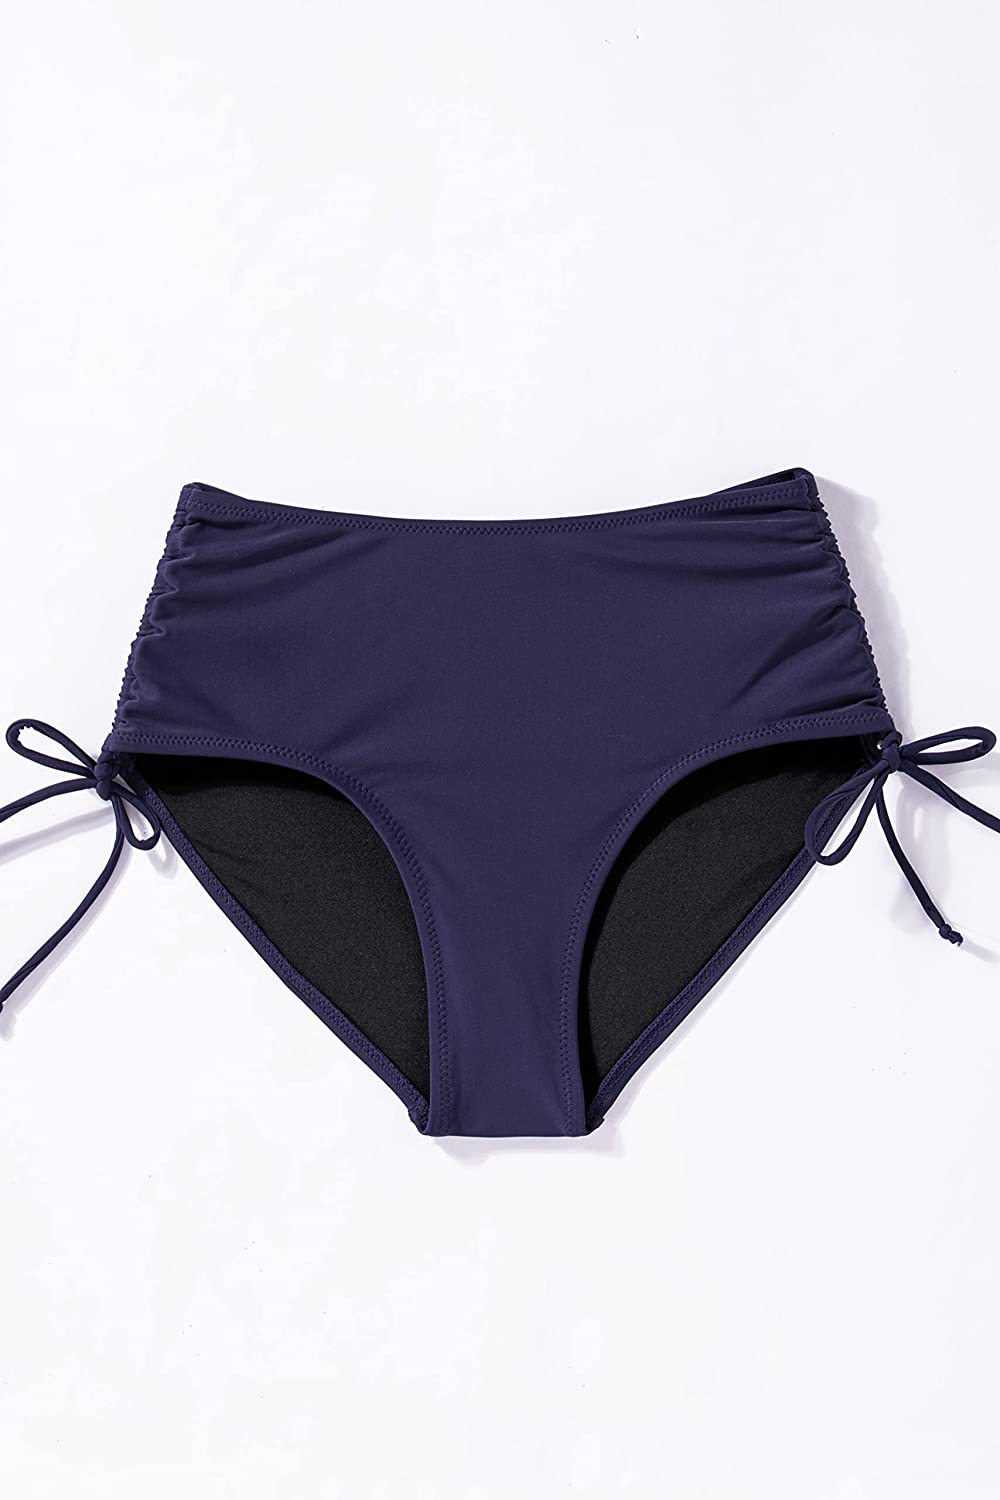 Beautikini Women's Black High Waisted Bikini Bottoms Tummy Control Swim Shorts Full Coverage Tankini Bathing Bottom